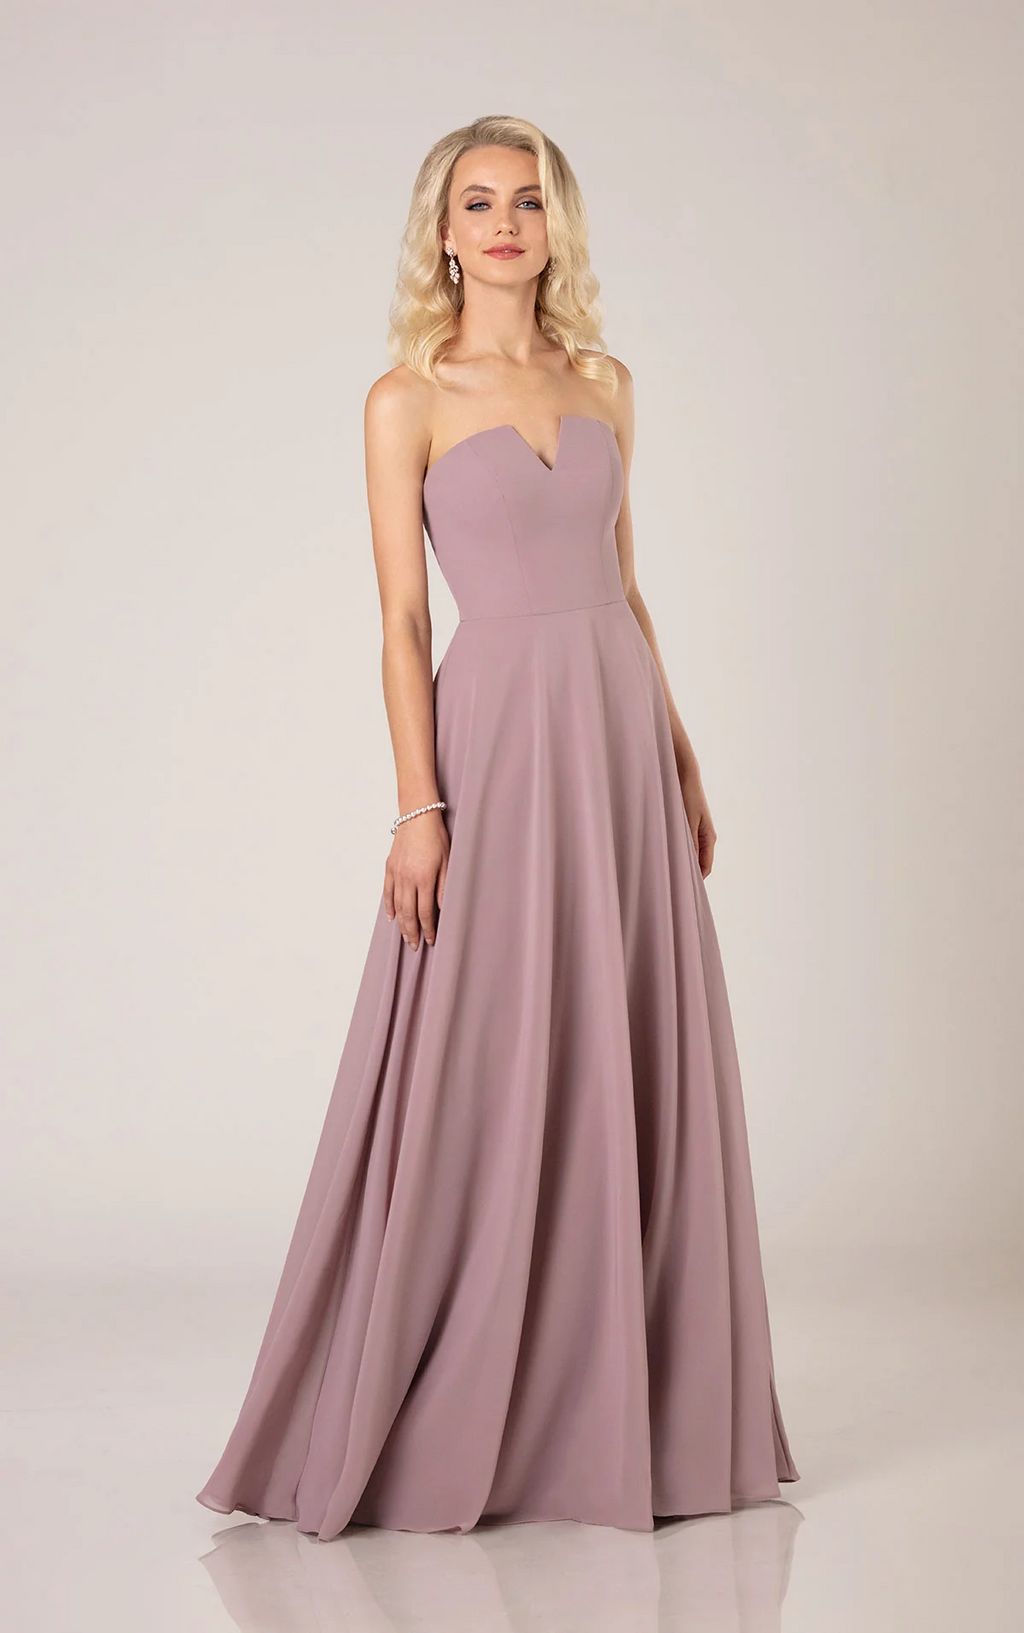 Sorella Vita Dress Style 9372 (Desert Rose-Size 14) Prom, Ball., Black-tie, Bridesmaid, Pageant